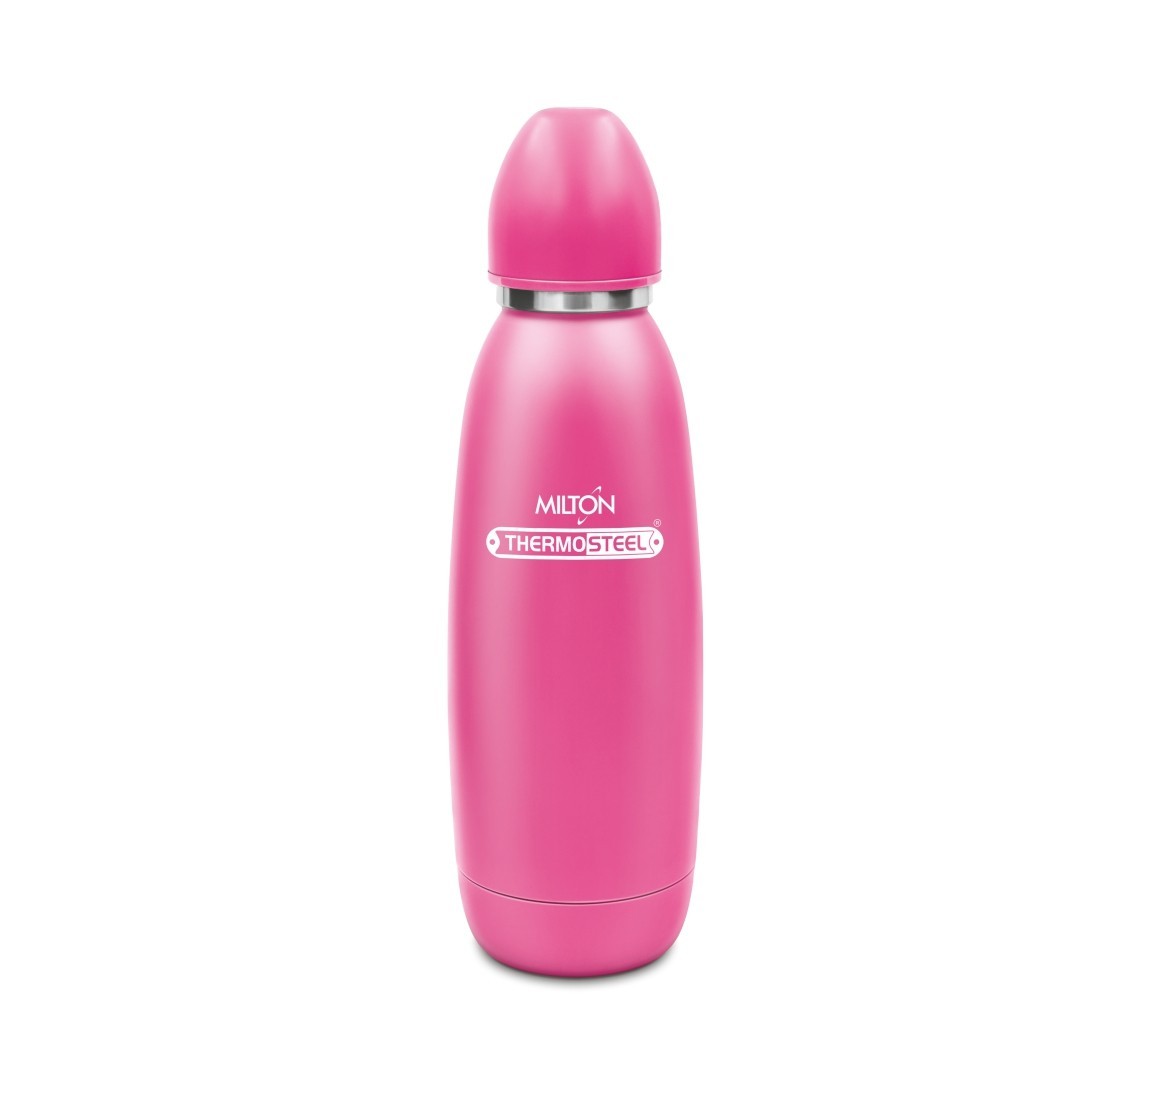 milton thermosteel water bottle 750ml price